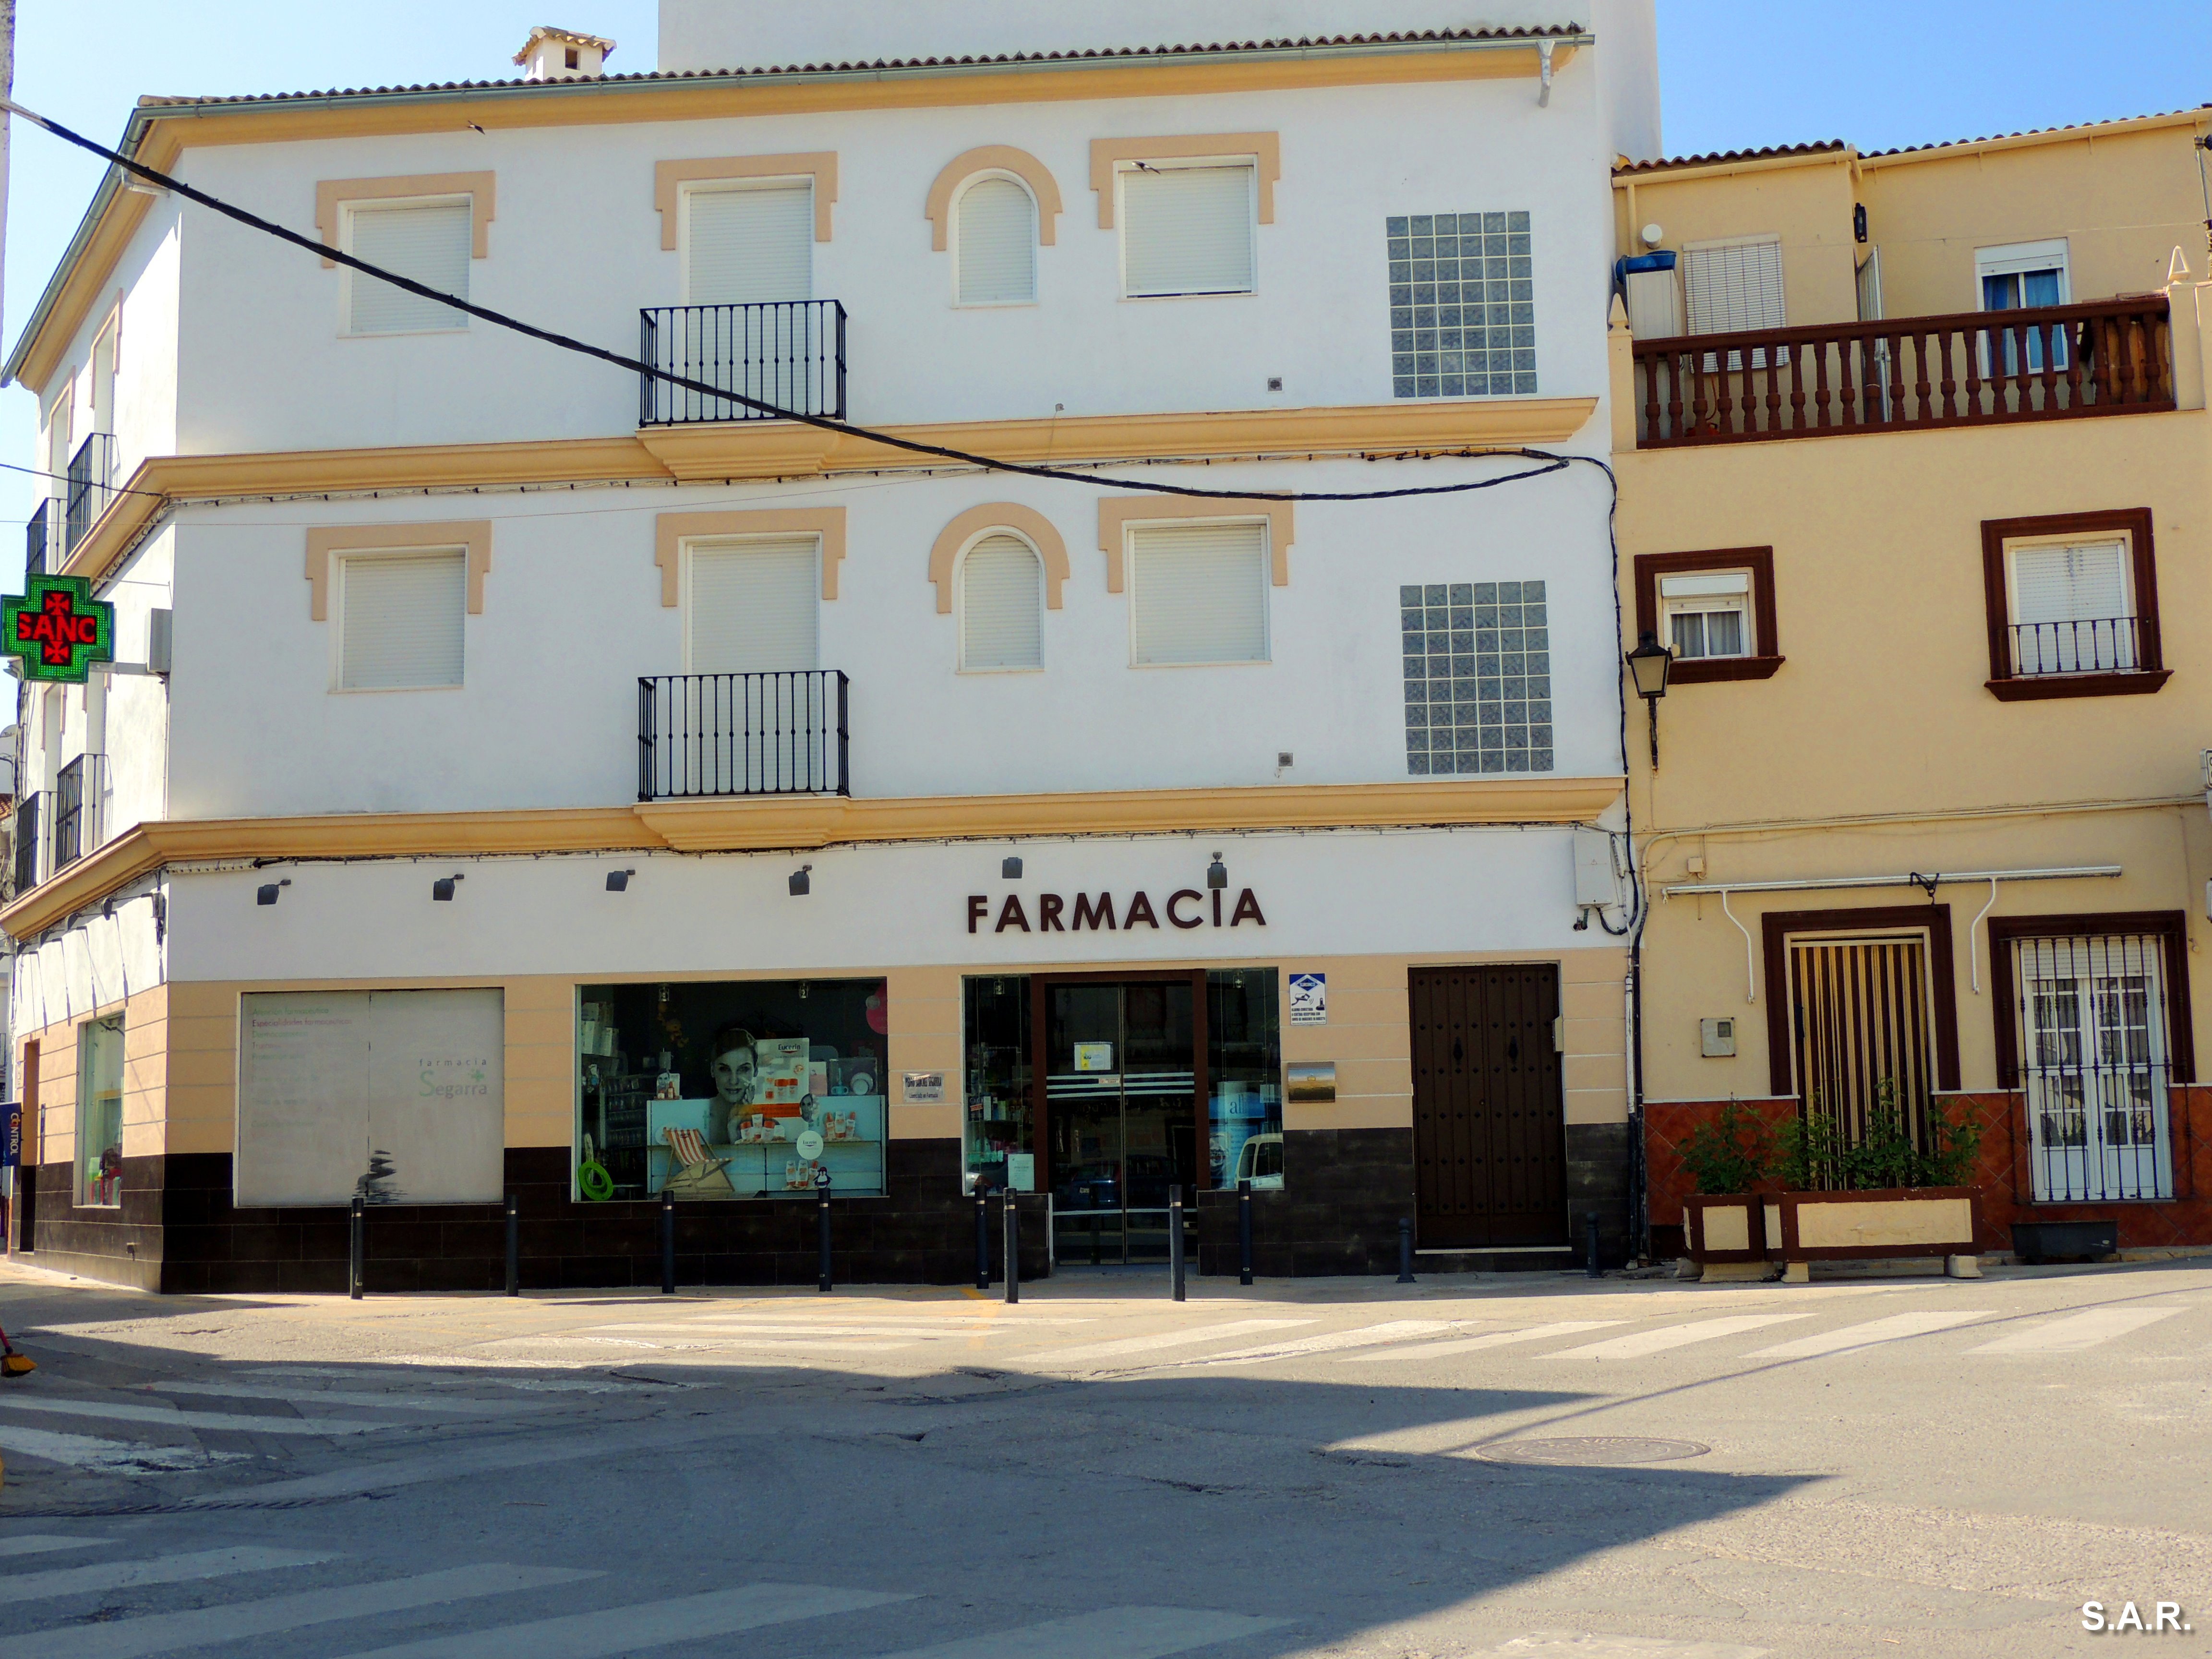 Foto: Farmacia Alcalá del Valle - Alcala Del Valle (Cádiz), España